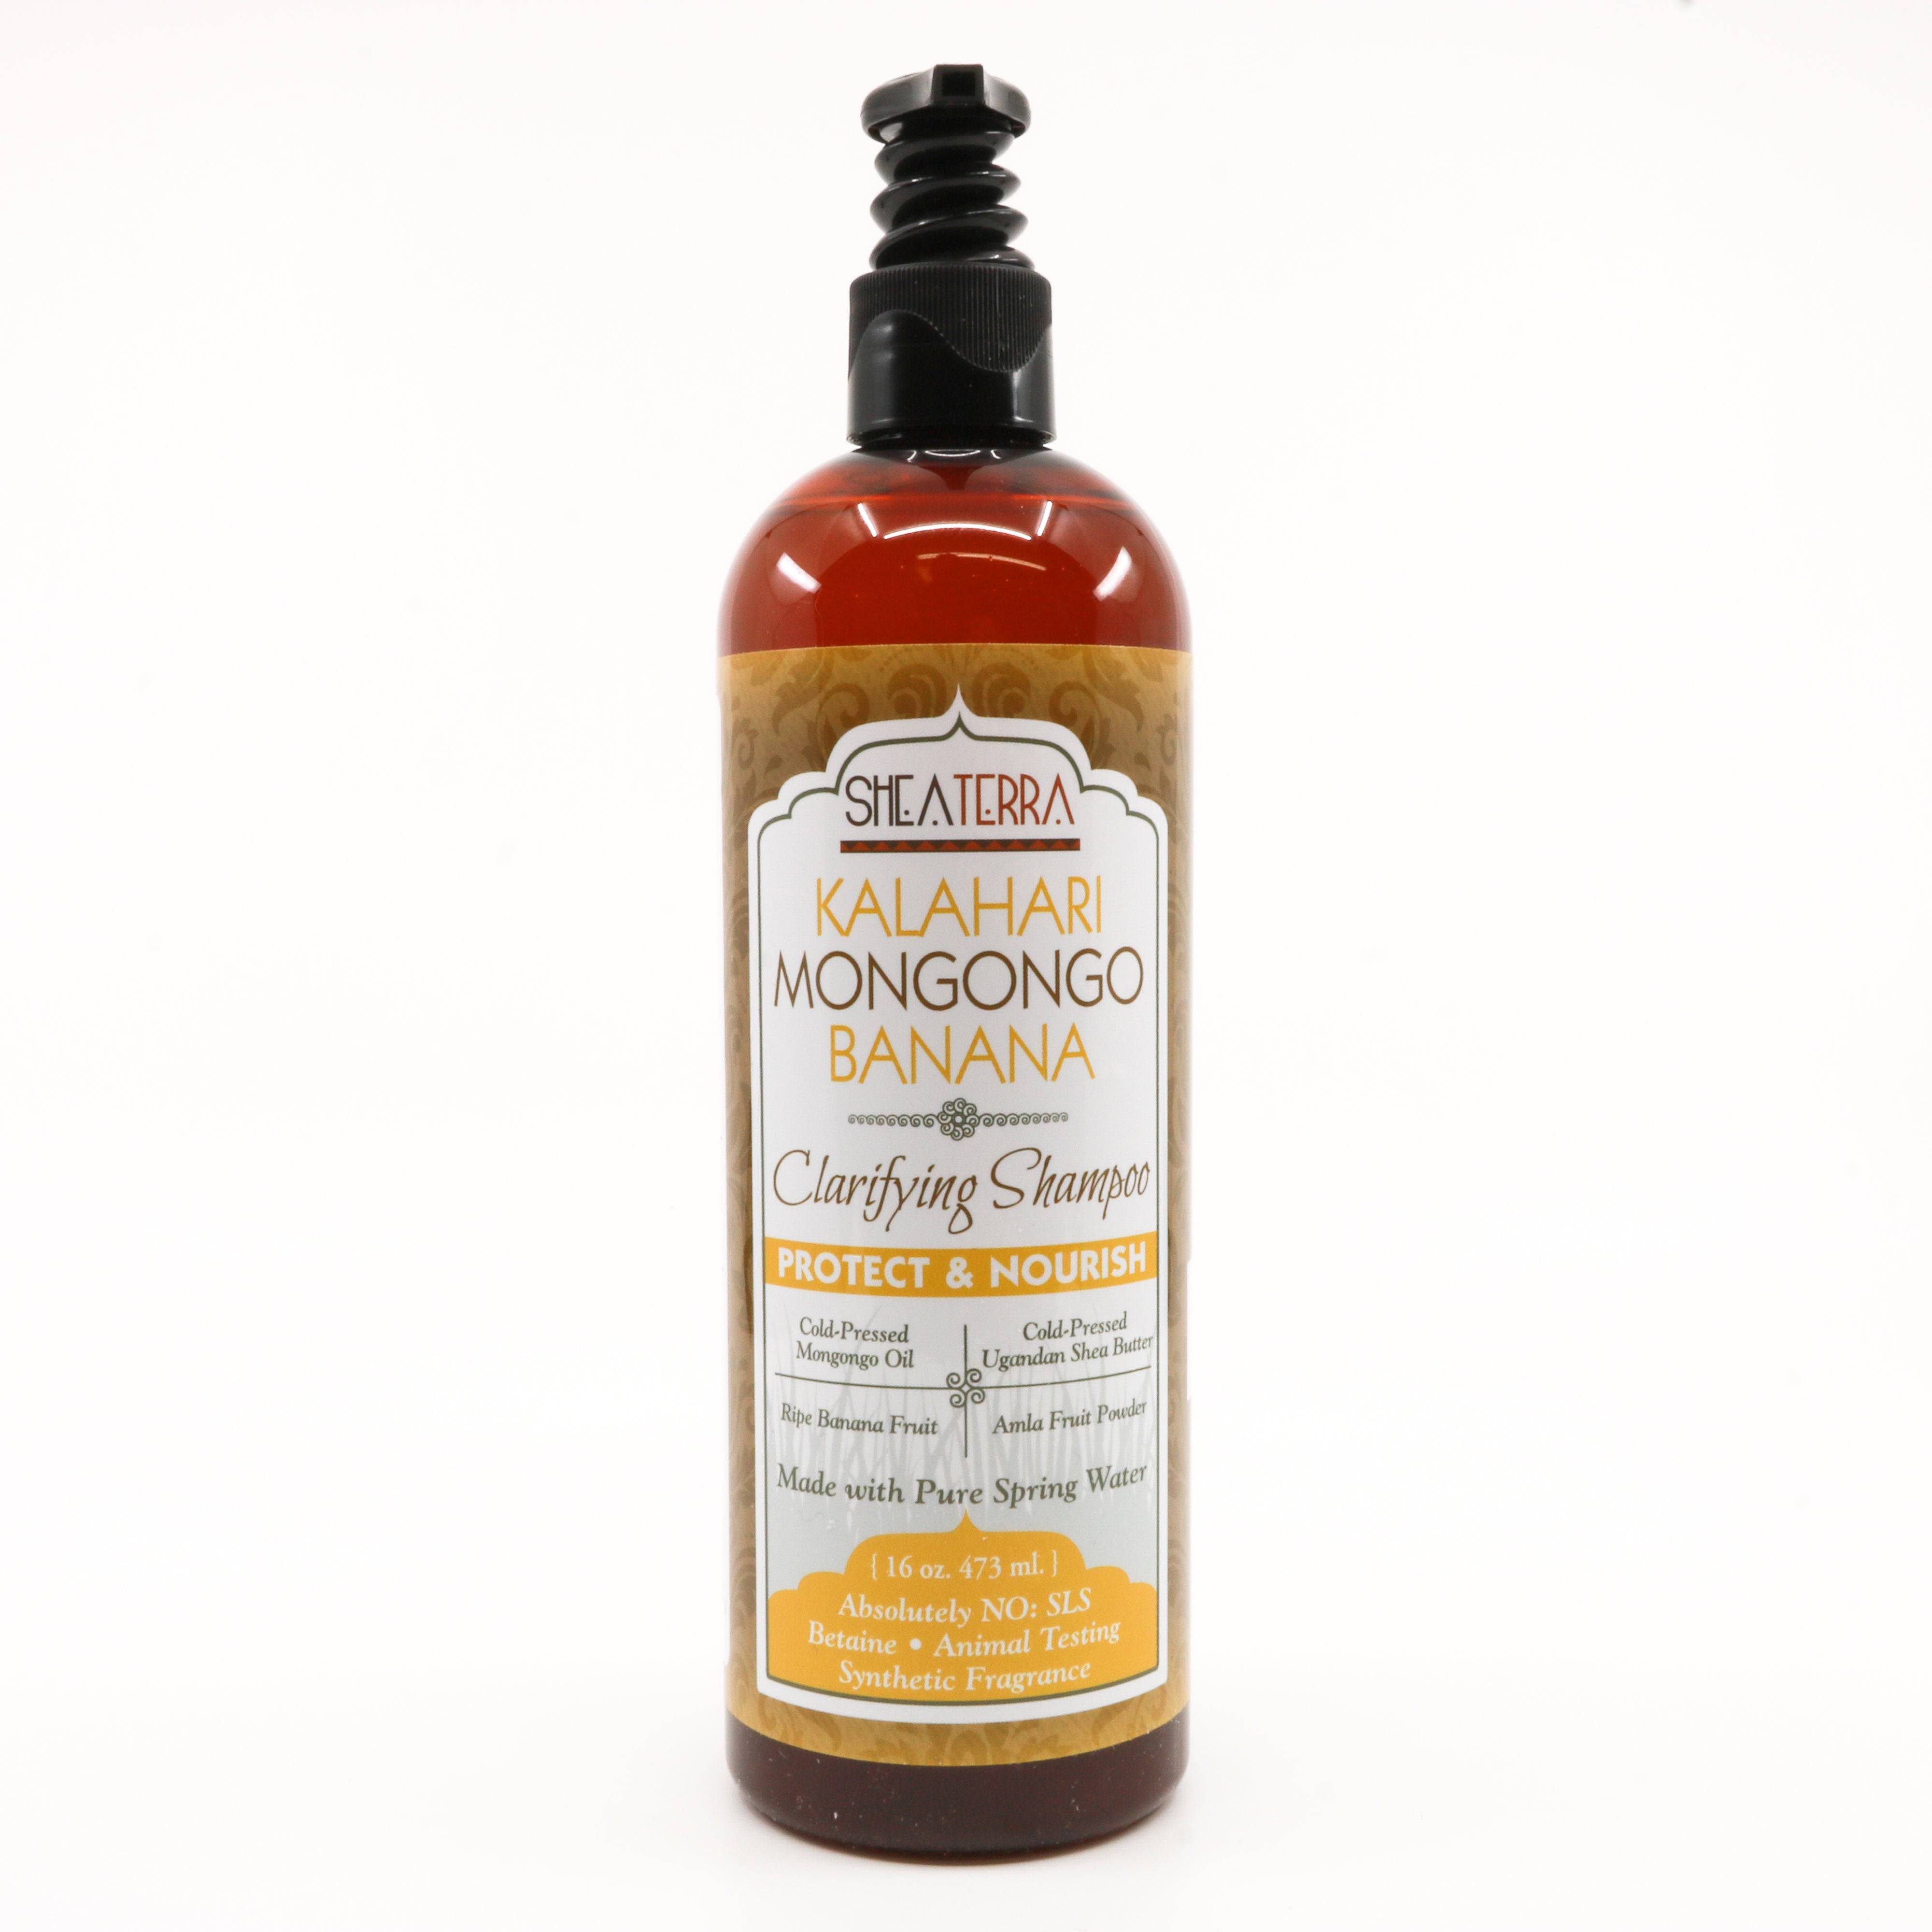 Kalahari Mongongo Banana Clarifying Shampoo (Protect & Nourish) - The Mockingbird Apothecary & General Store